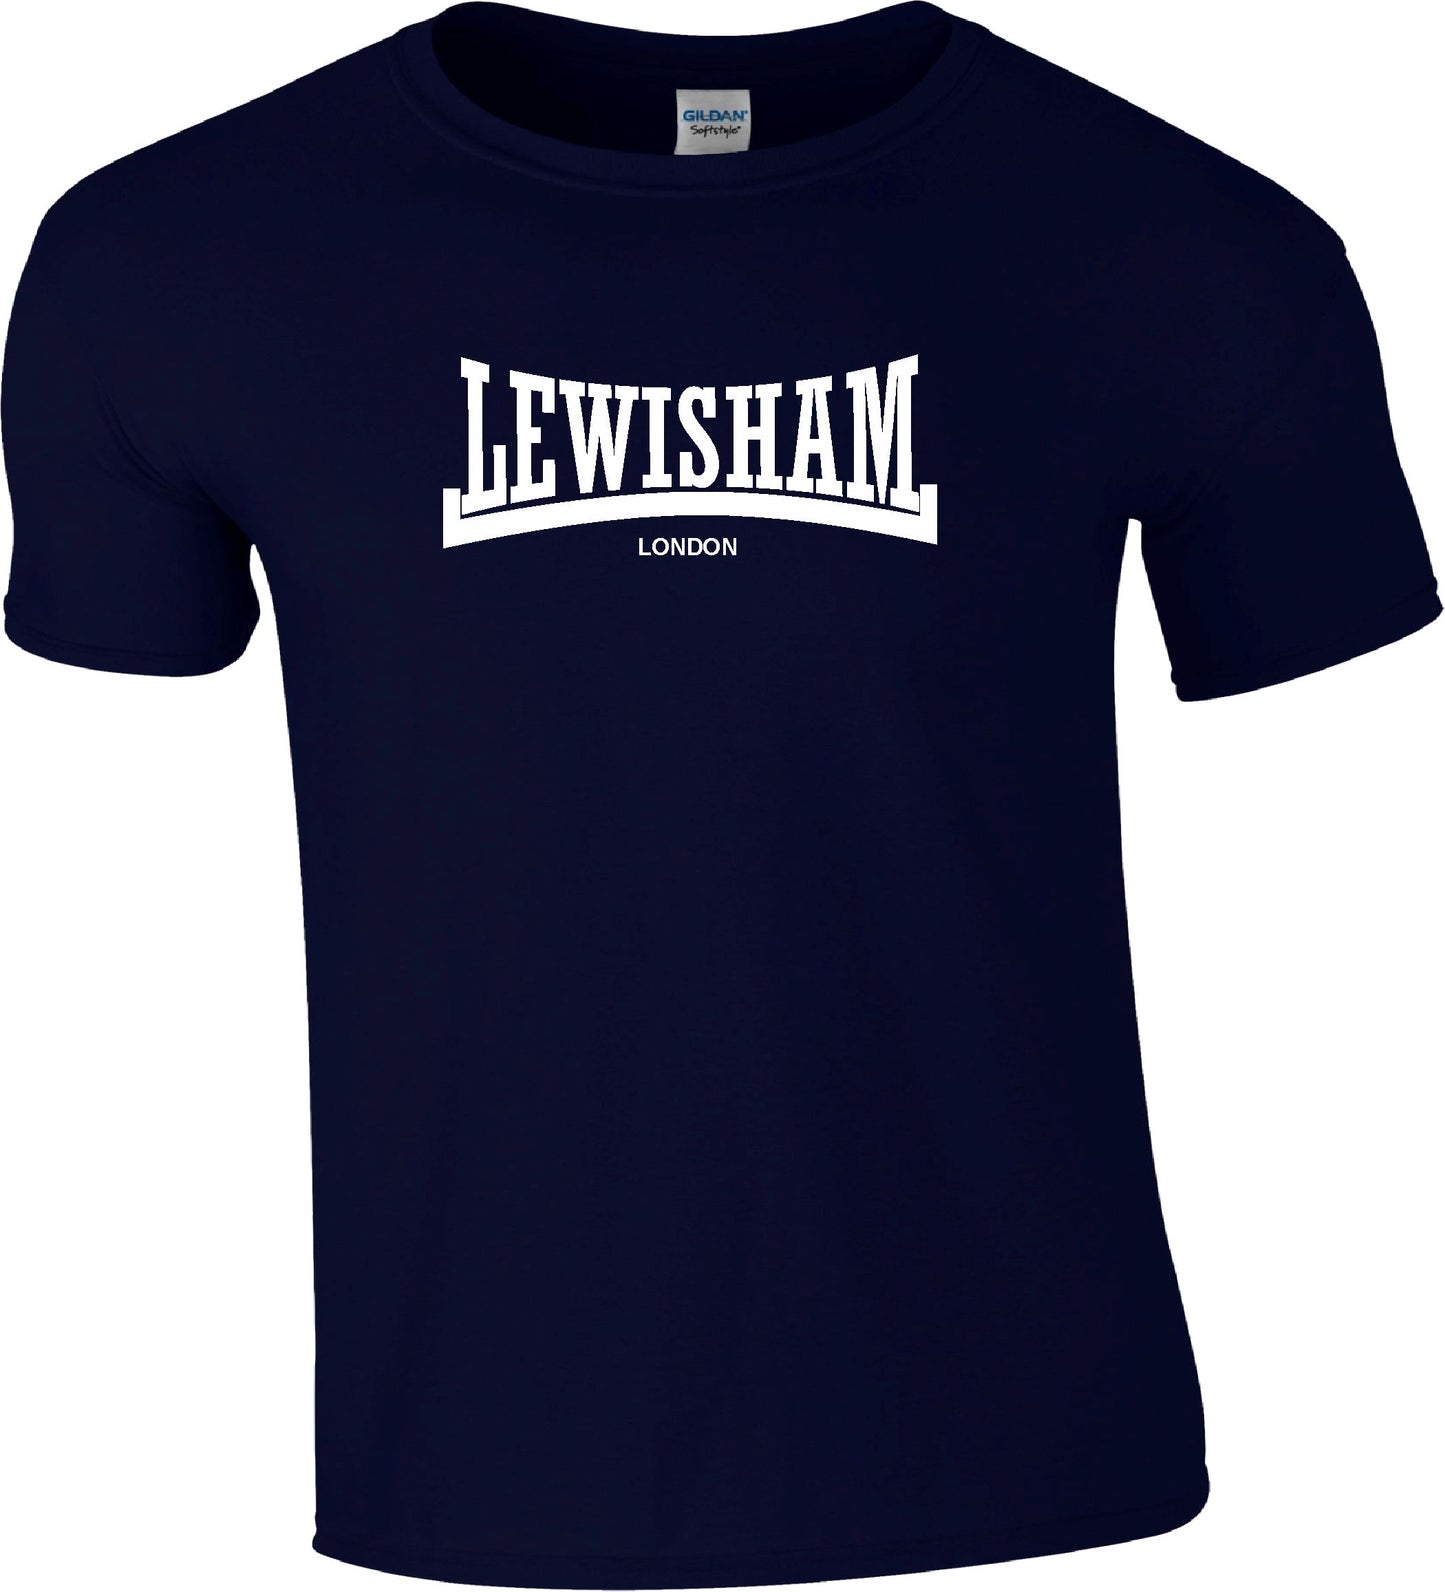 Lewisham T-Shirt - London Souvenir, Personalised Custom Print Available, Various Colours